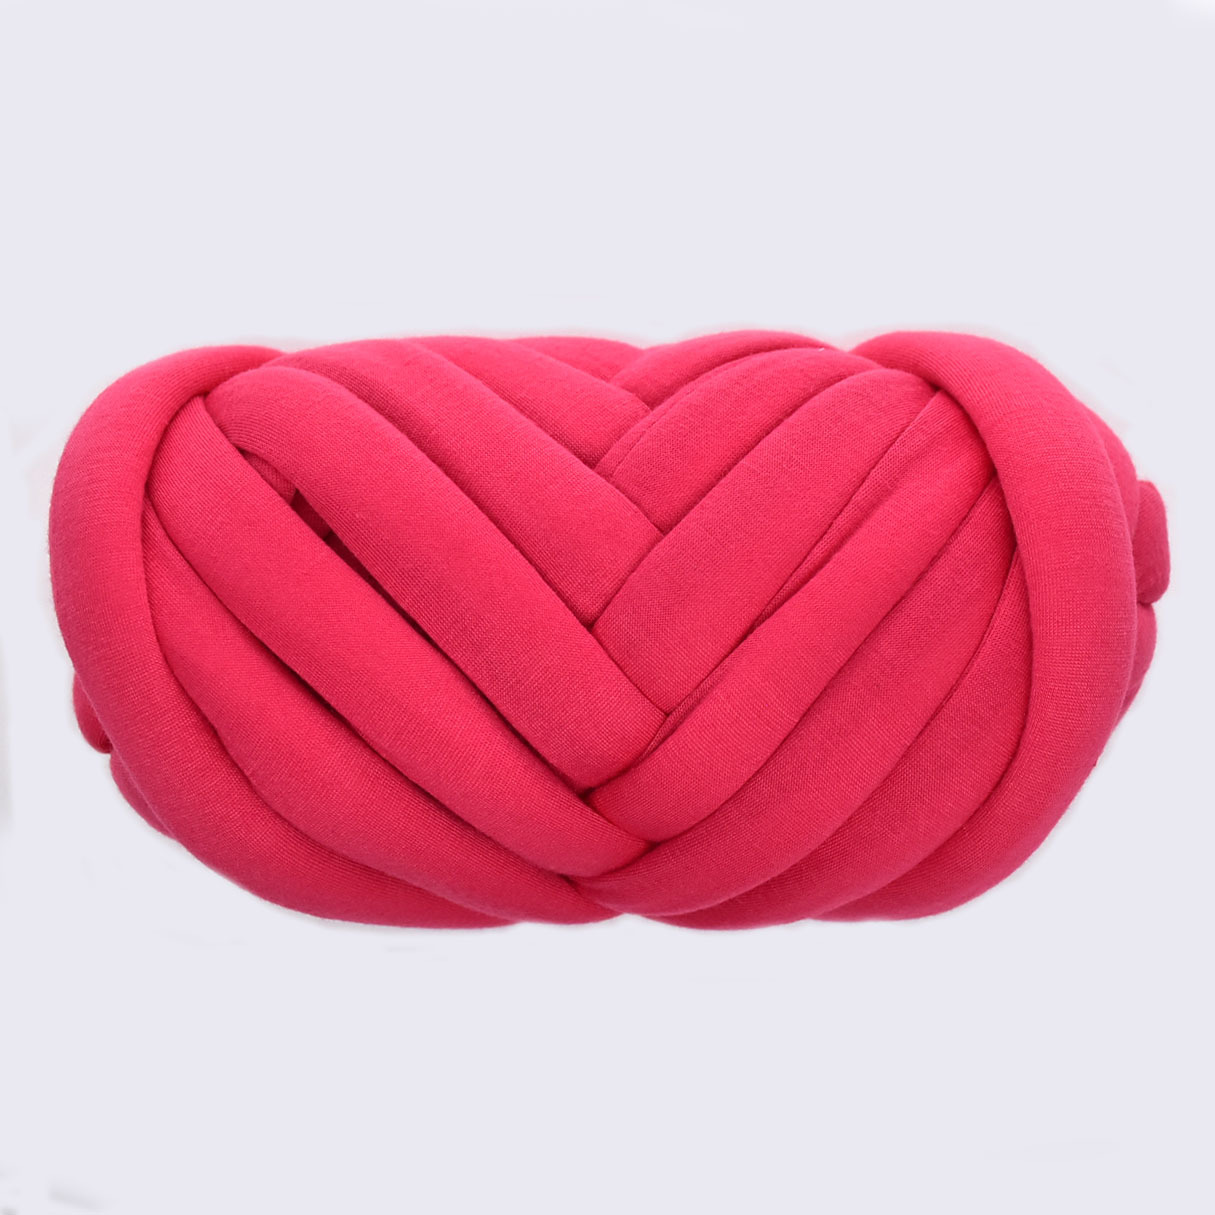 Zituop Super Chunky Roving Bulky Yarn for Hand Knitting Crochet, 250g, 8.8  Ounze (Light Pink)